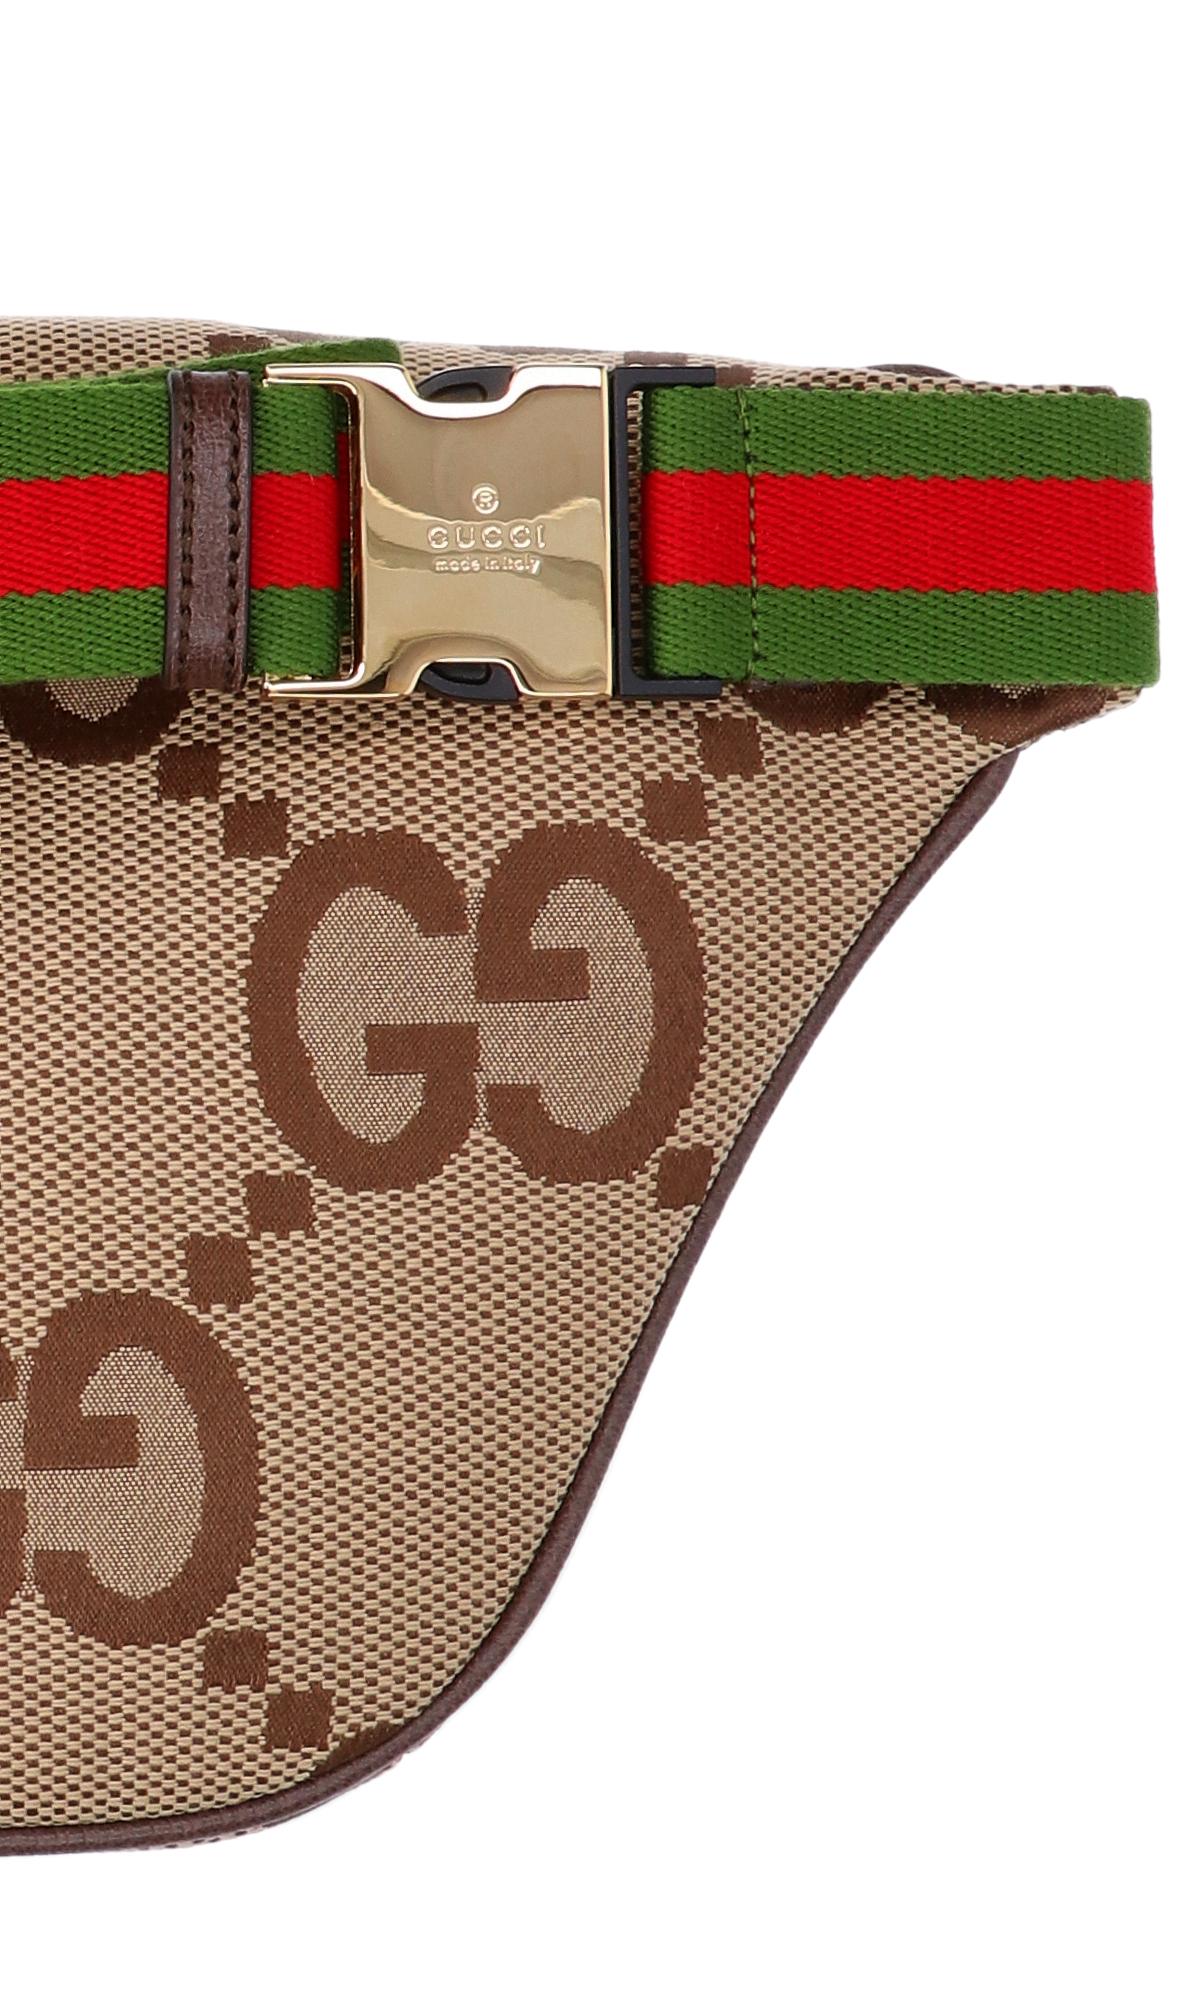 Gucci Jumbo GG Belt Bag in Natural